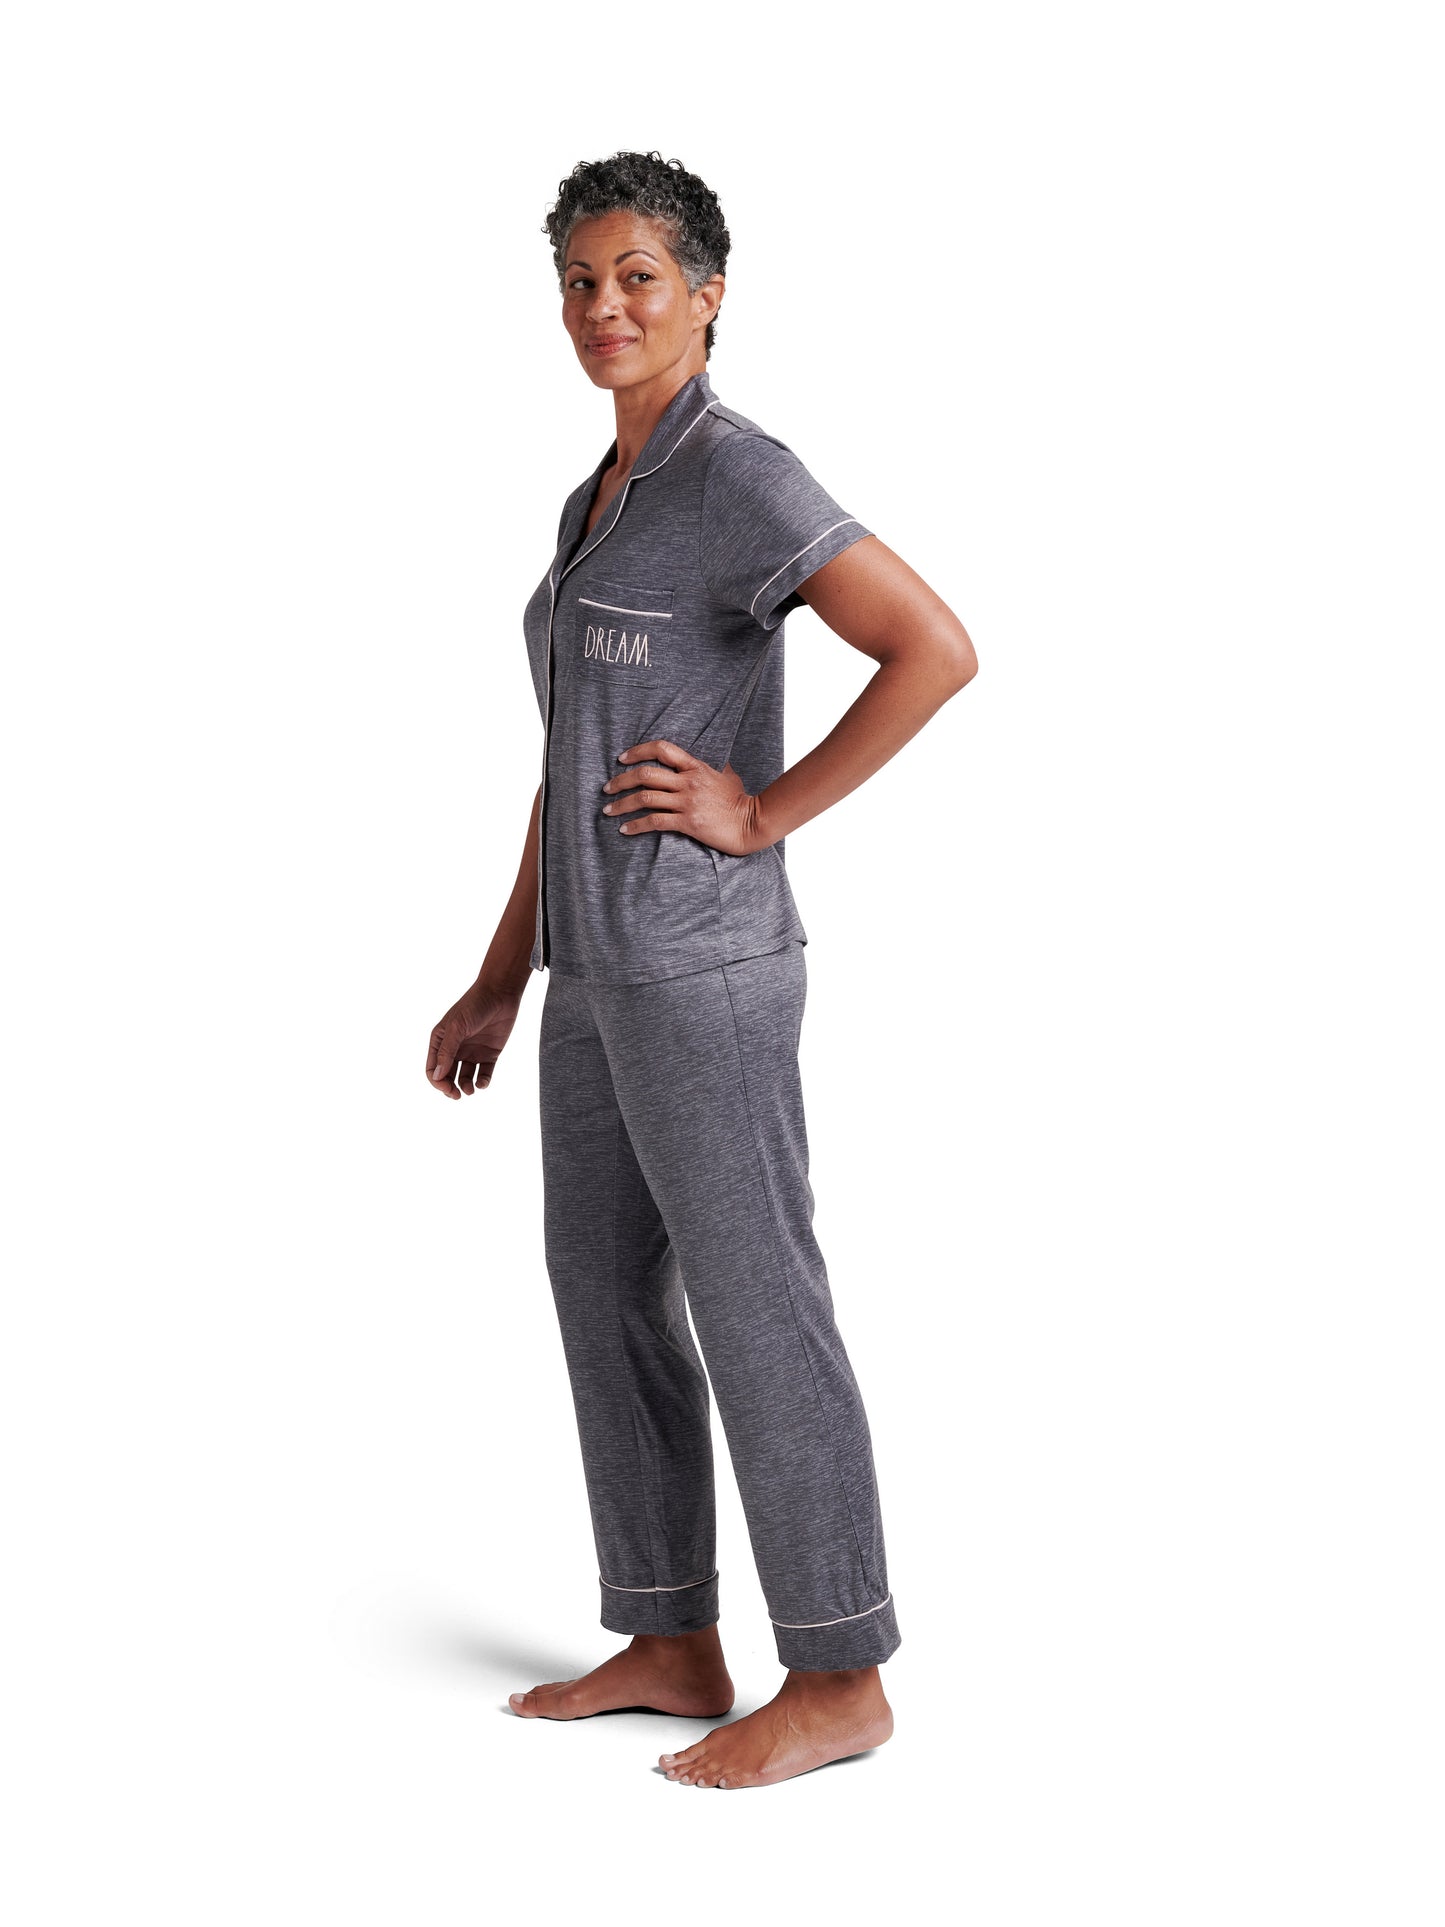 Women's "DREAM" Short Sleeve Notch Collar Top and Pant Pajama Set - Rae Dunn Wear - W Pants Set